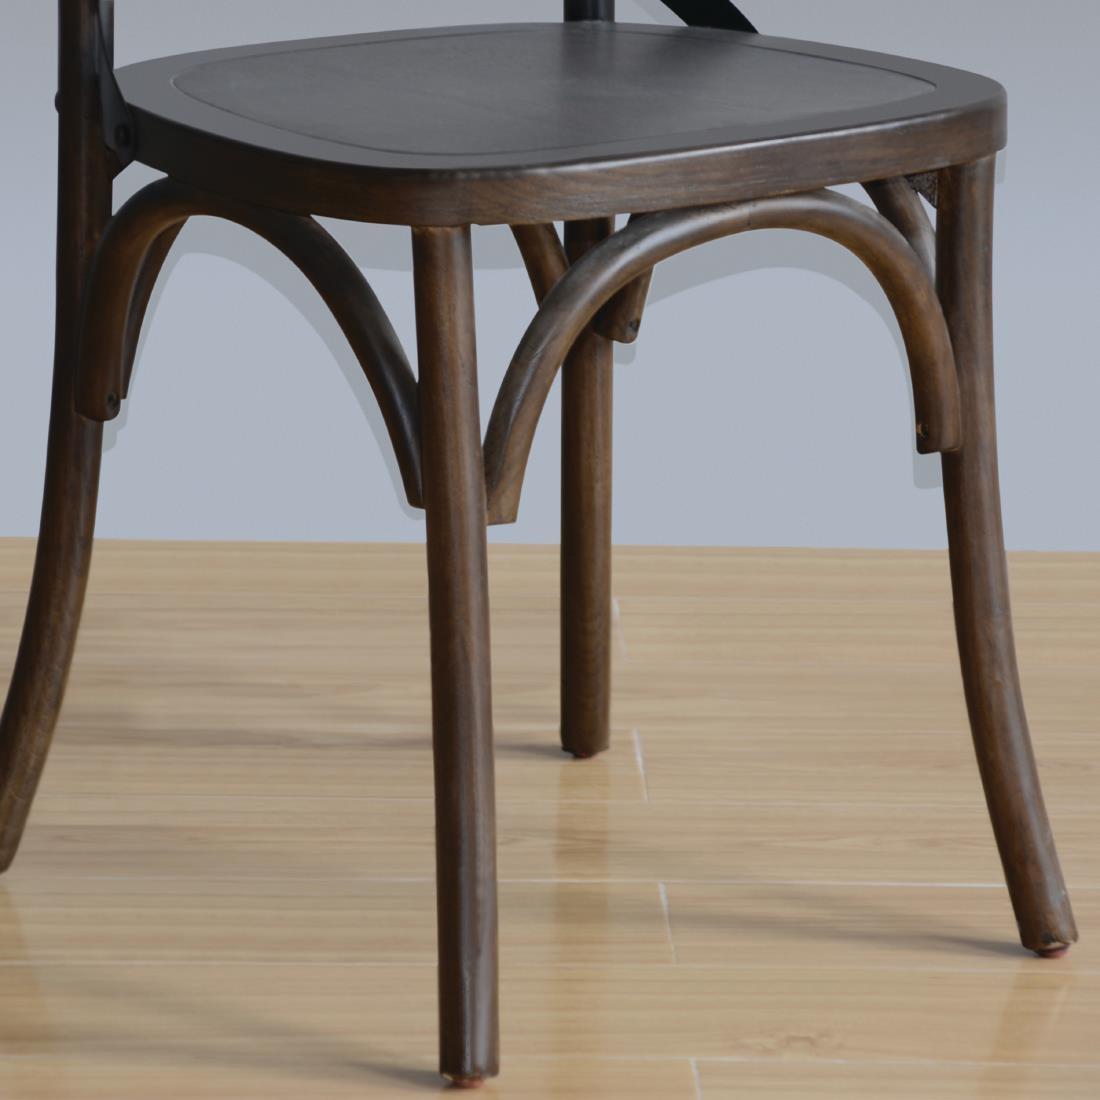 GG658 - Bolero Wooden Dining Chair with Metal Cross Backrest (Walnut Finish) (Pa - GG658  - 7